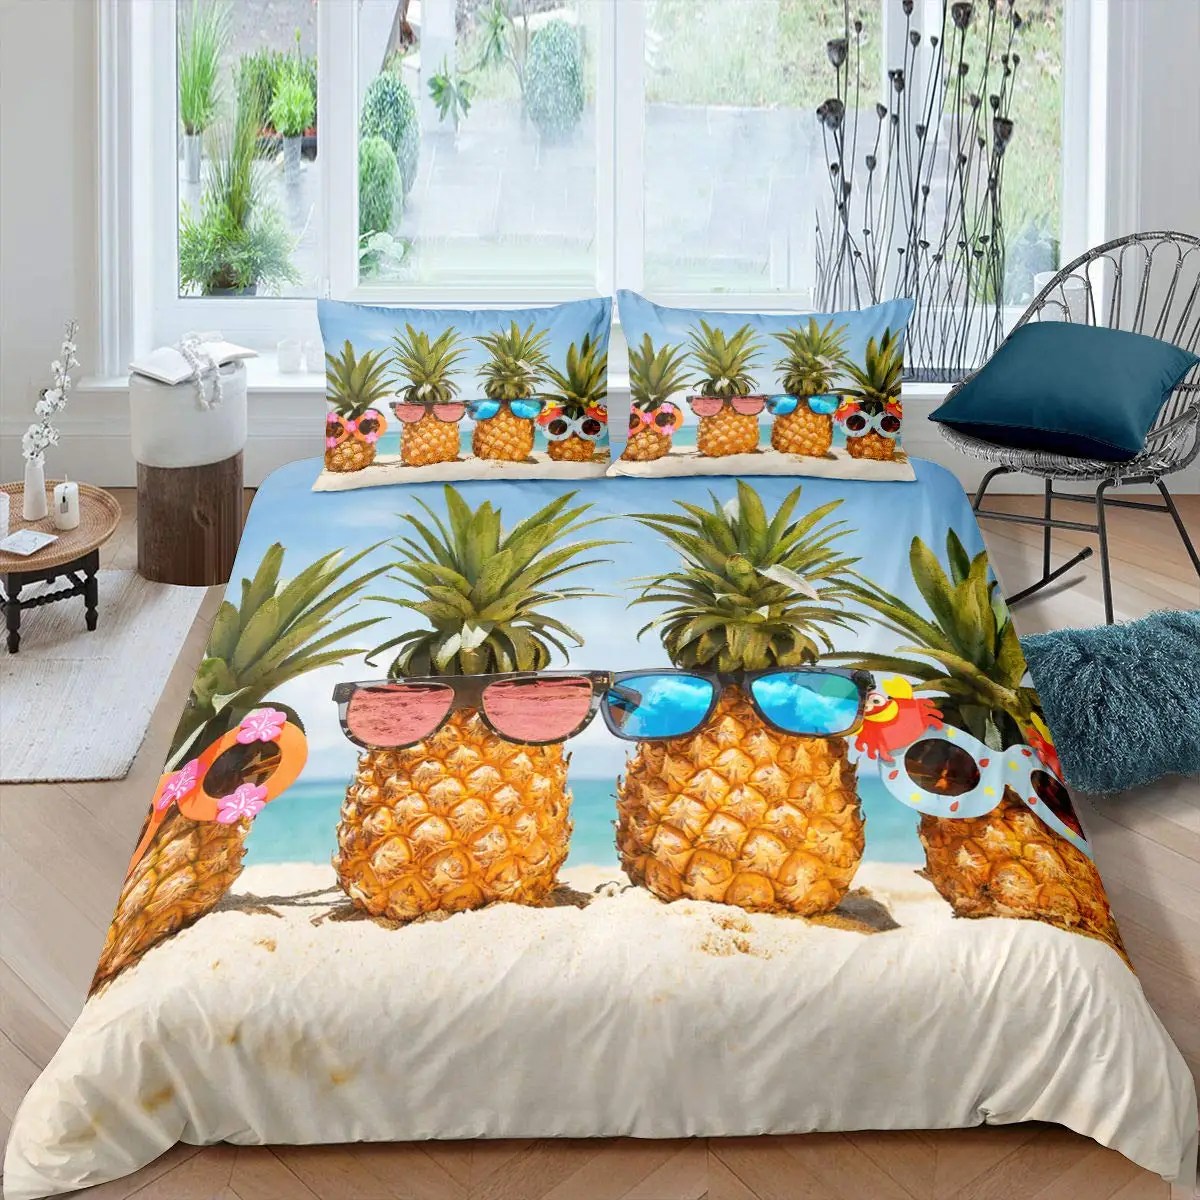 

Pineapple Duvet Cover Set King Size Yellow Geometric Pineapple Bedding Set Seaside Beach Theme Fruit Printed Comforter Cover